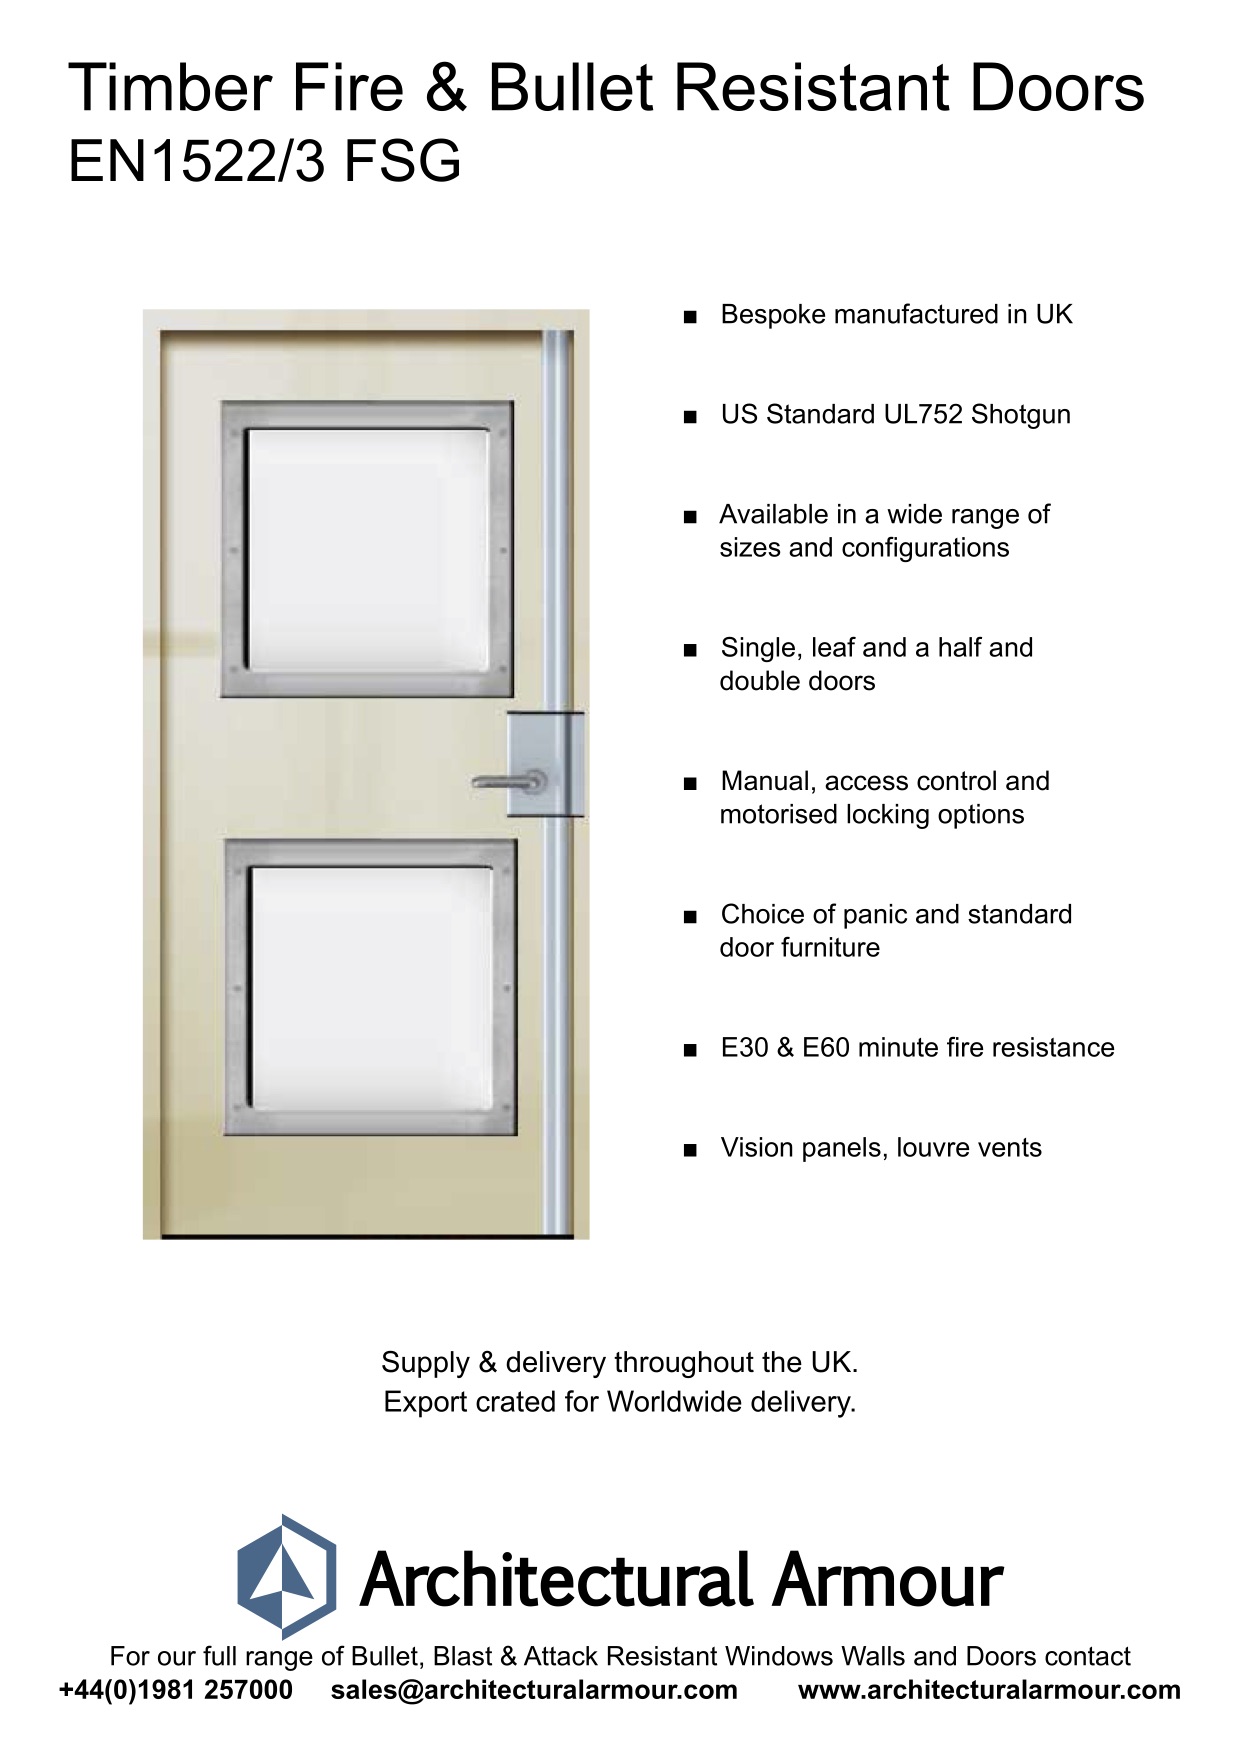 Fire-and-Bullet-proof-EN1522-3-FSG-Timber-Door-Vision-Panels-SG1